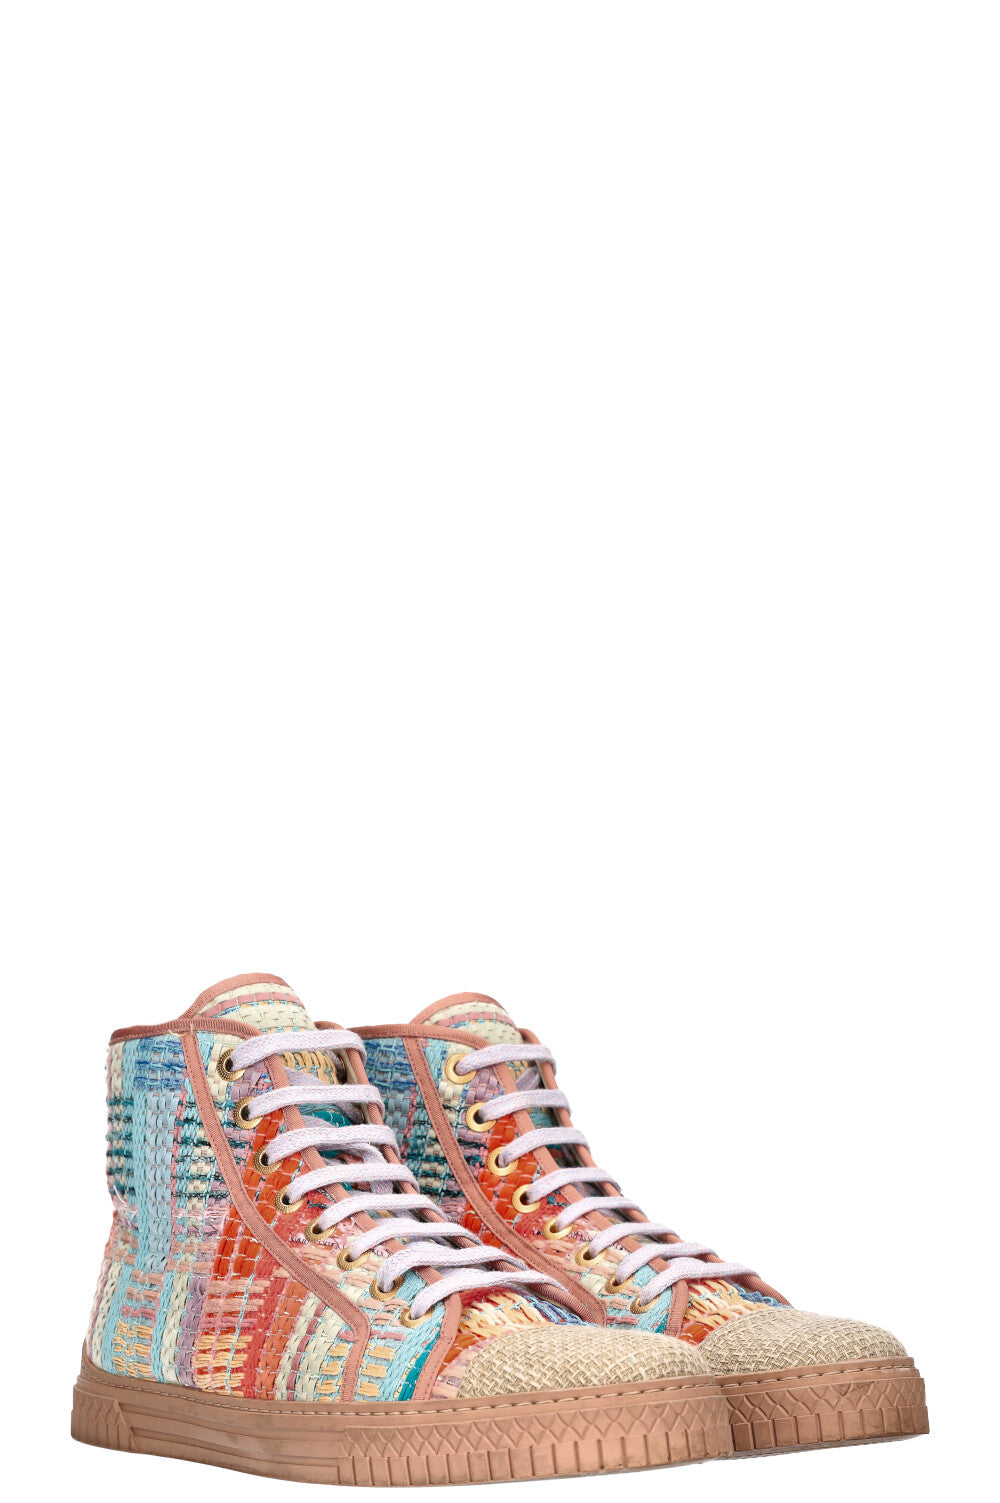 Chanel High Top Sneakers Tweed Multicolor